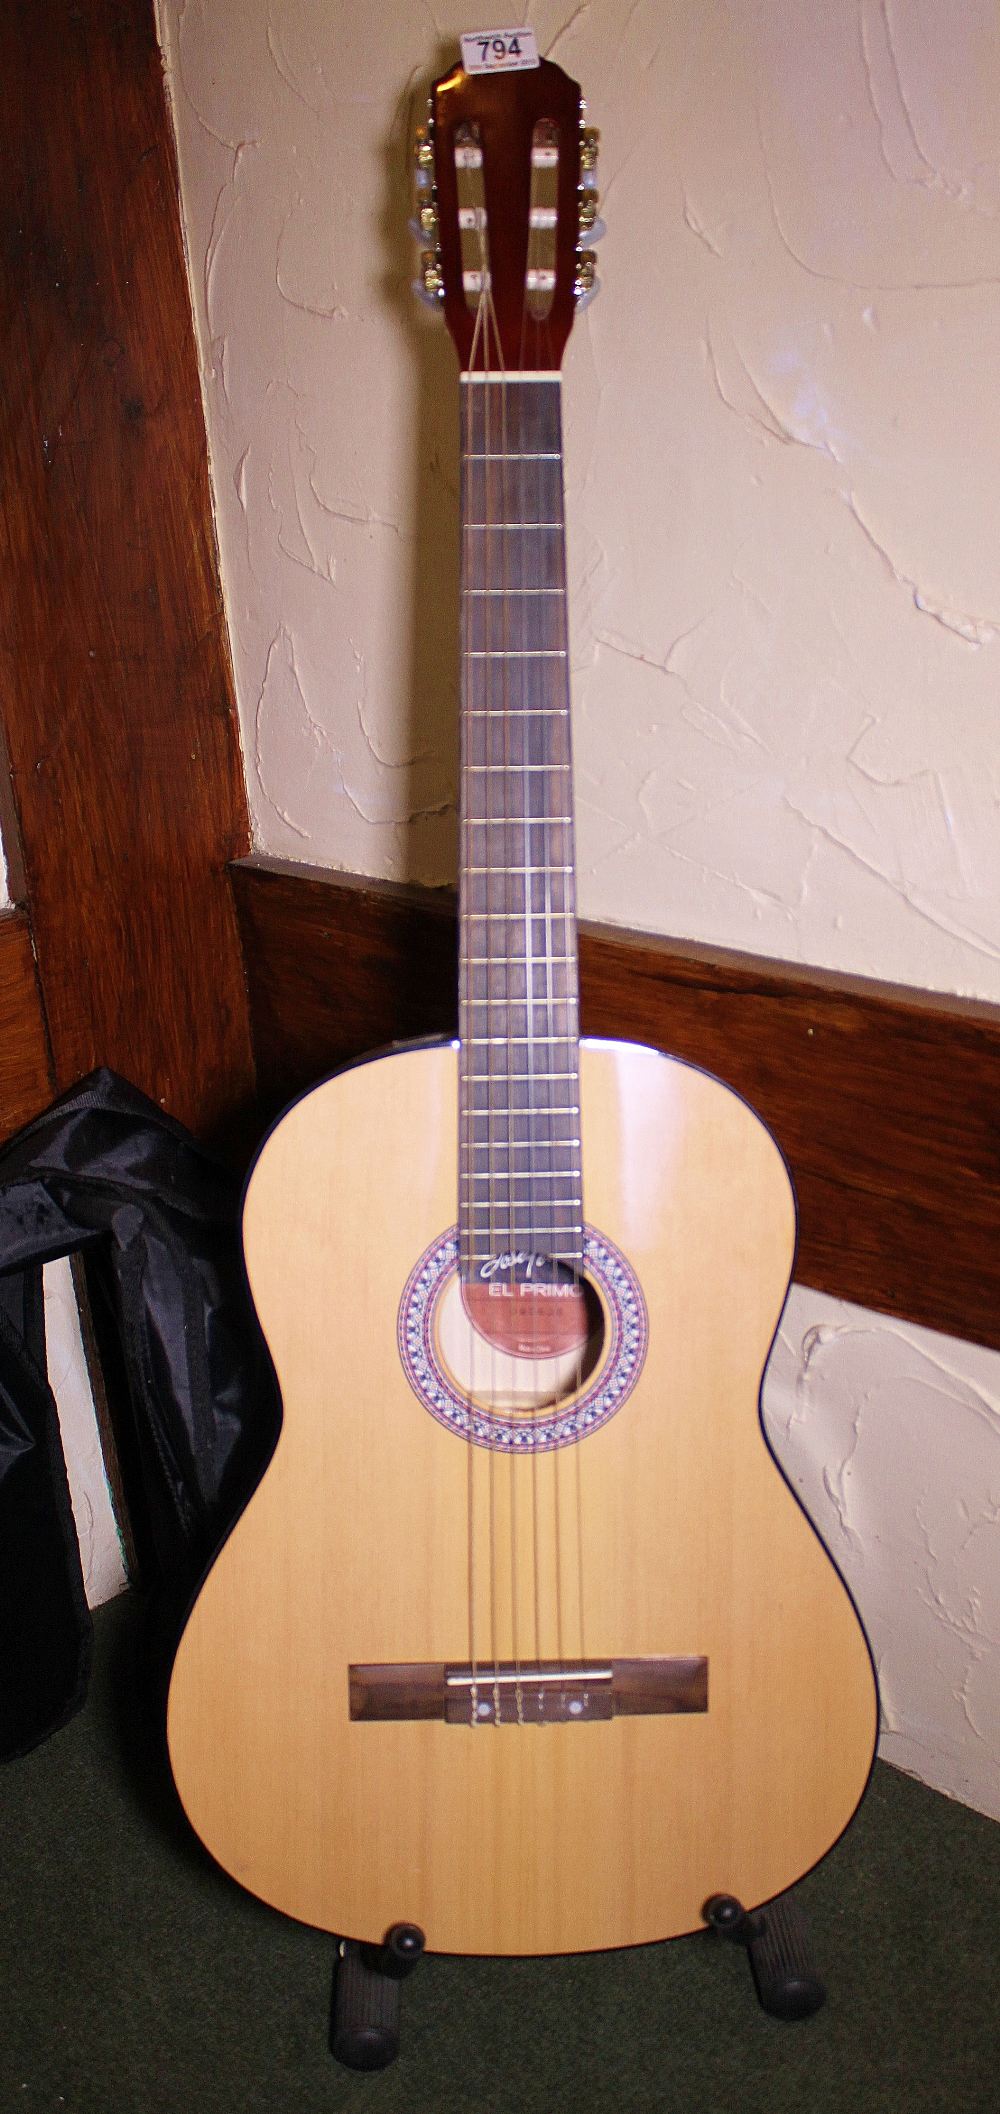 Jose Ferrer El Primo six string acoustic guitar